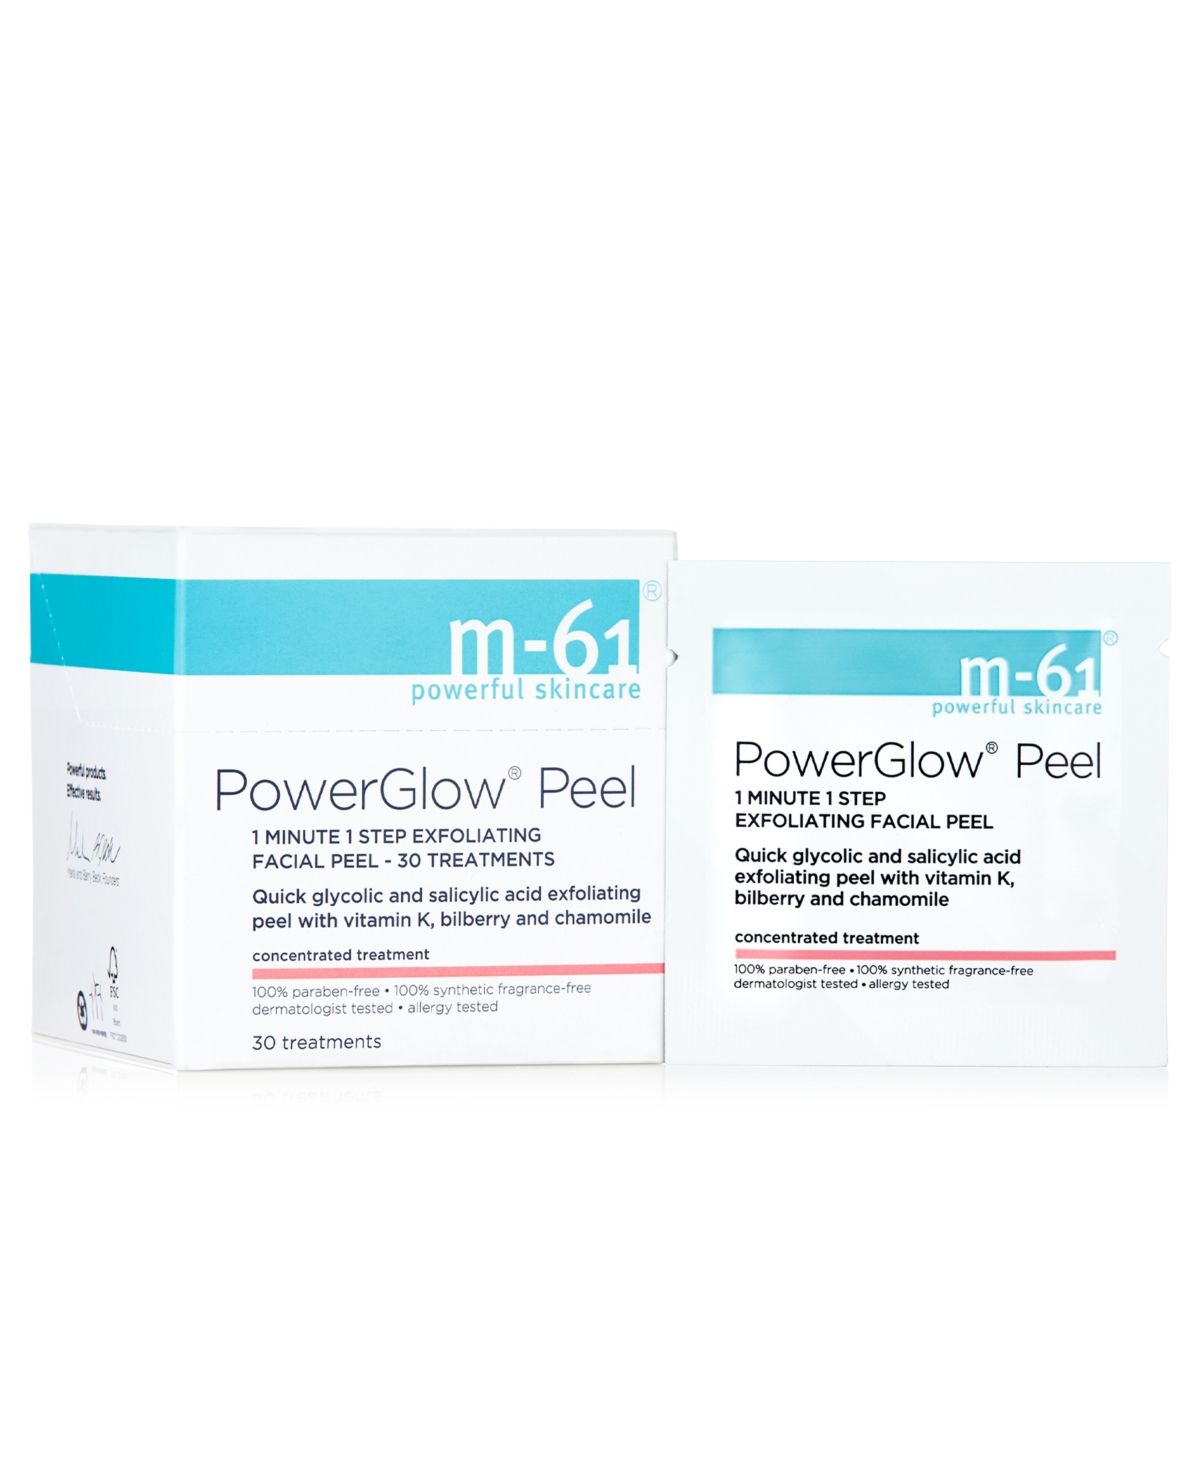 m-61 by Bluemercury PowerGlow Peel 1 Minute 1-Step Exfoliating Facial Peel - 30 Treatments | Macys (US)